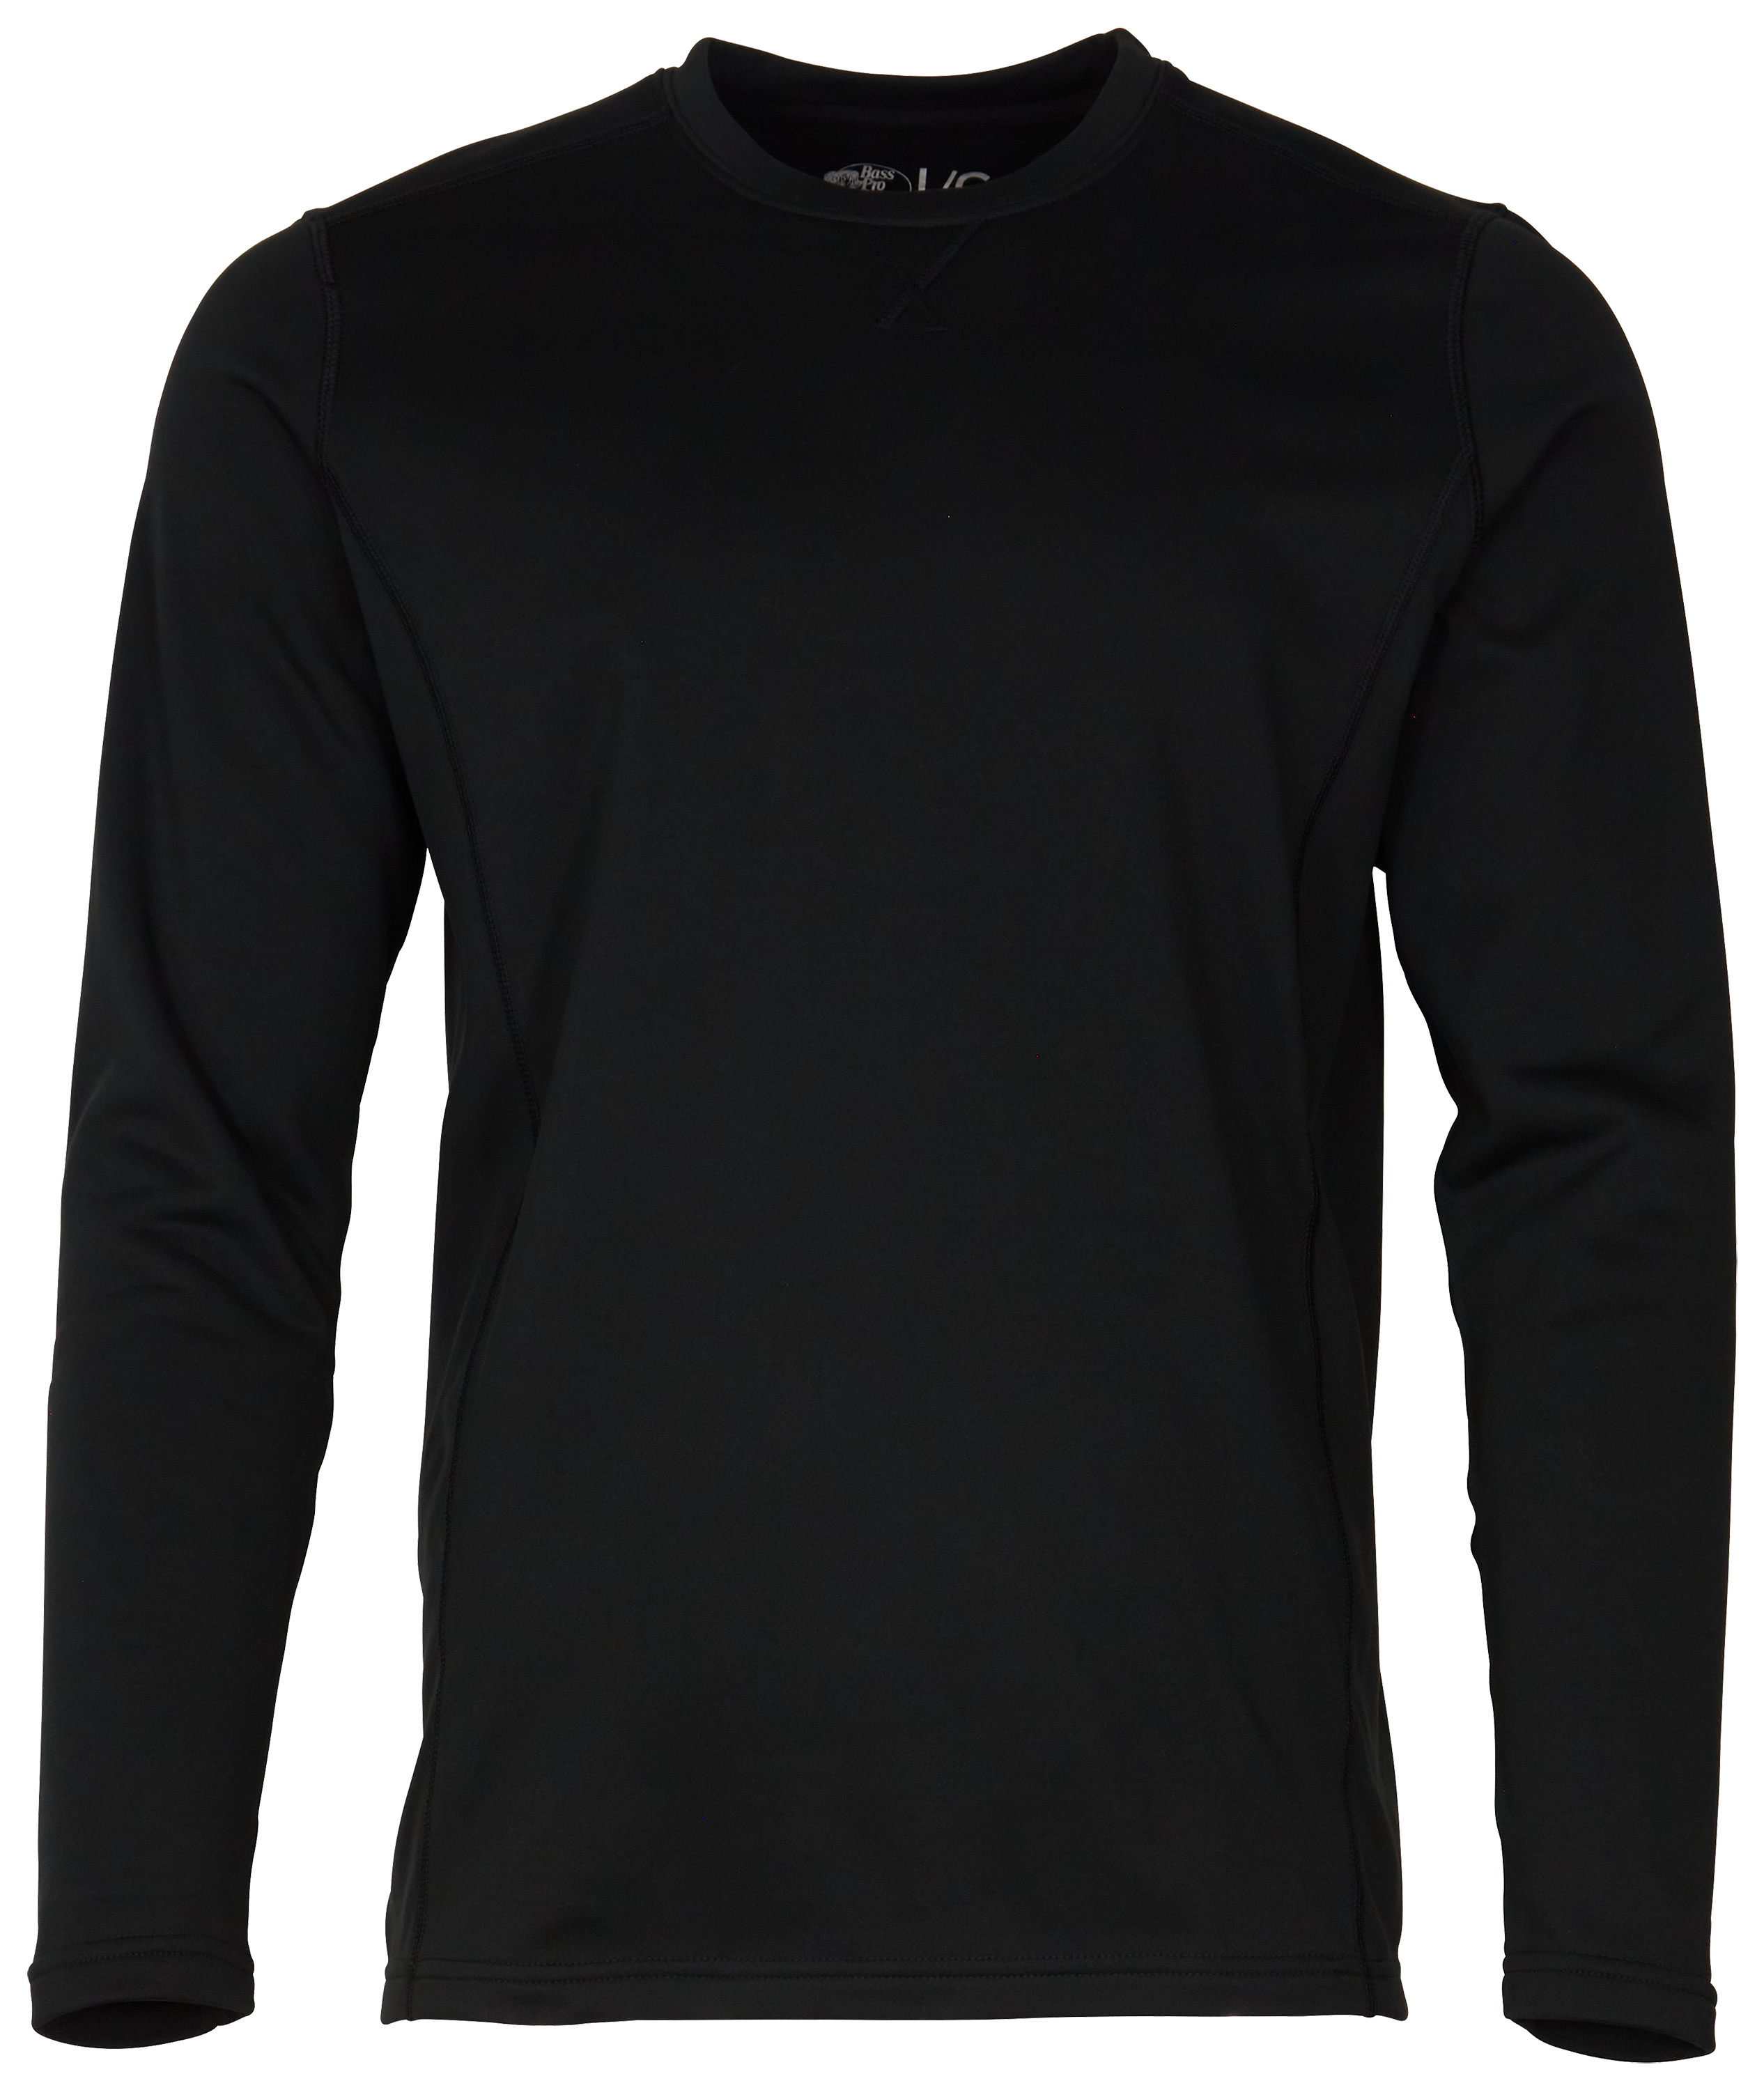 Bass Pro Shops Thermal Long-Sleeve Shirt for Men - Black - 3XL